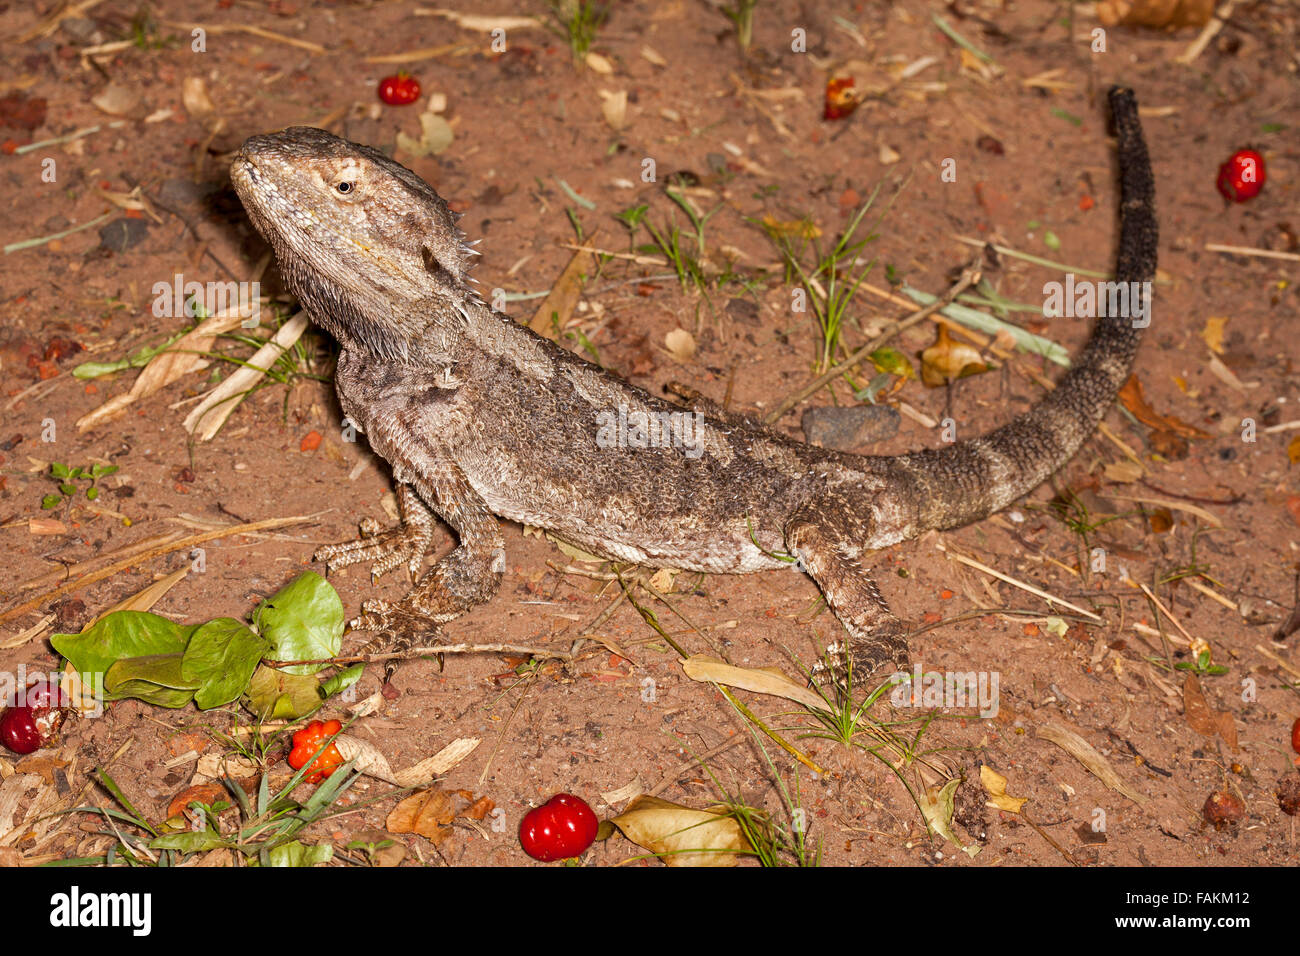 Australian bearded dragon lizard, Pogona barbata, in the wild in alert pose on red soil of urban garden Stock Photo